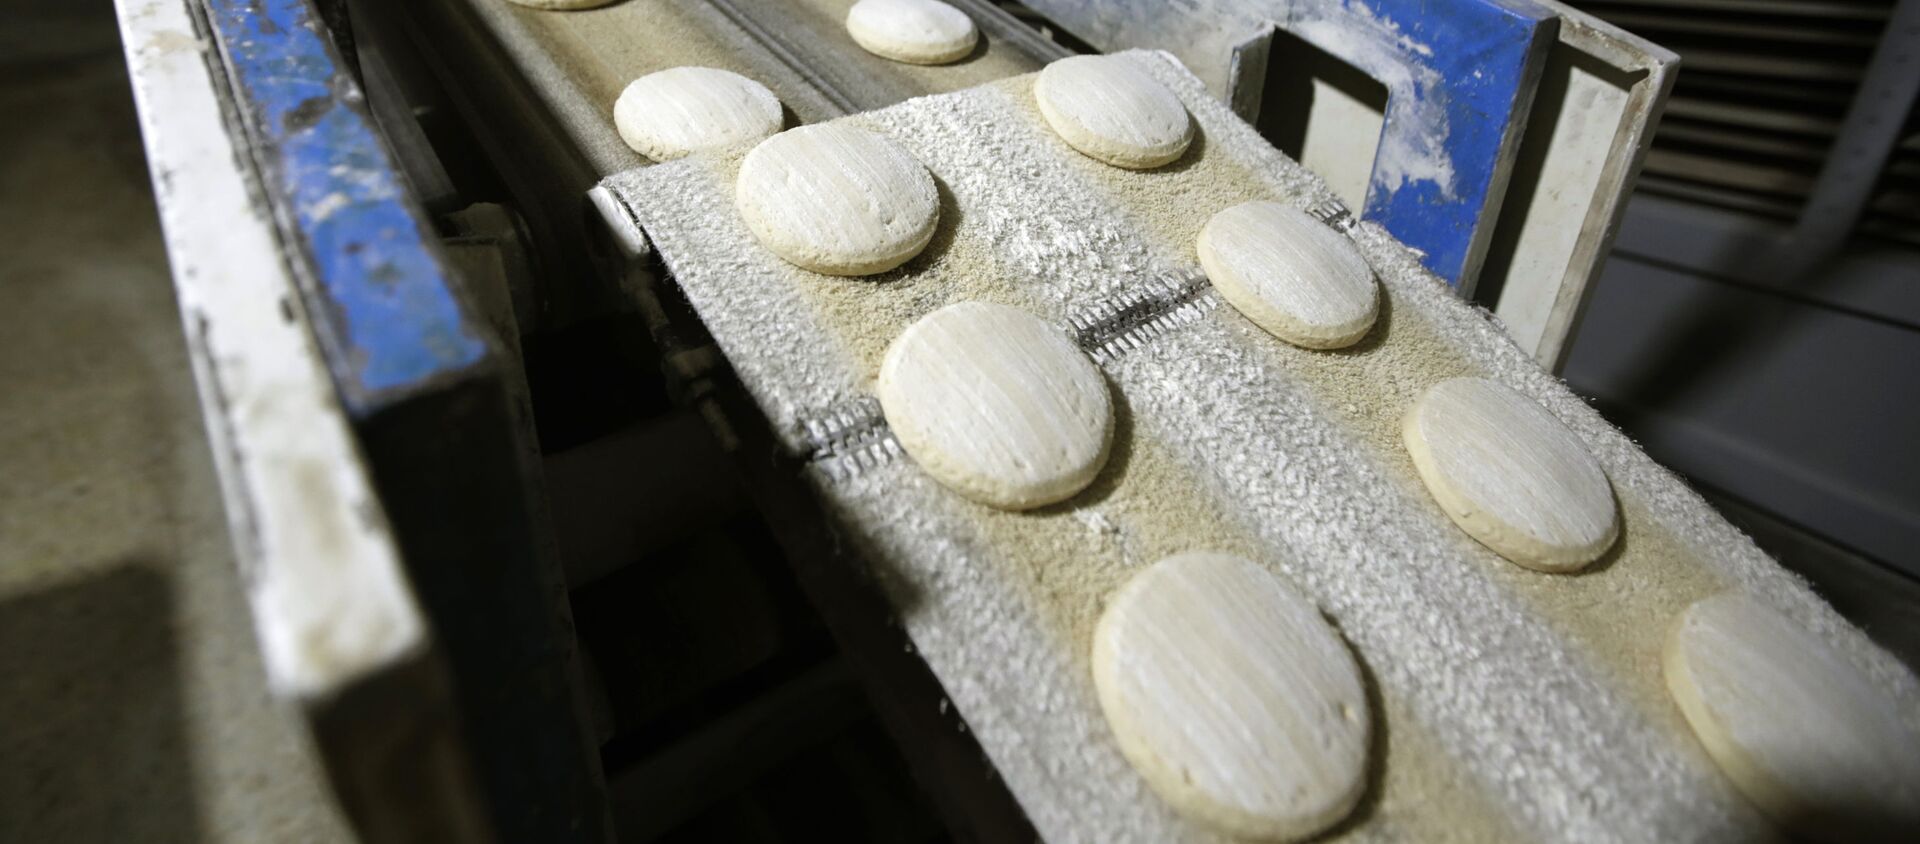 Производство хлеба, фото из архива - Sputnik Азербайджан, 1920, 02.03.2021